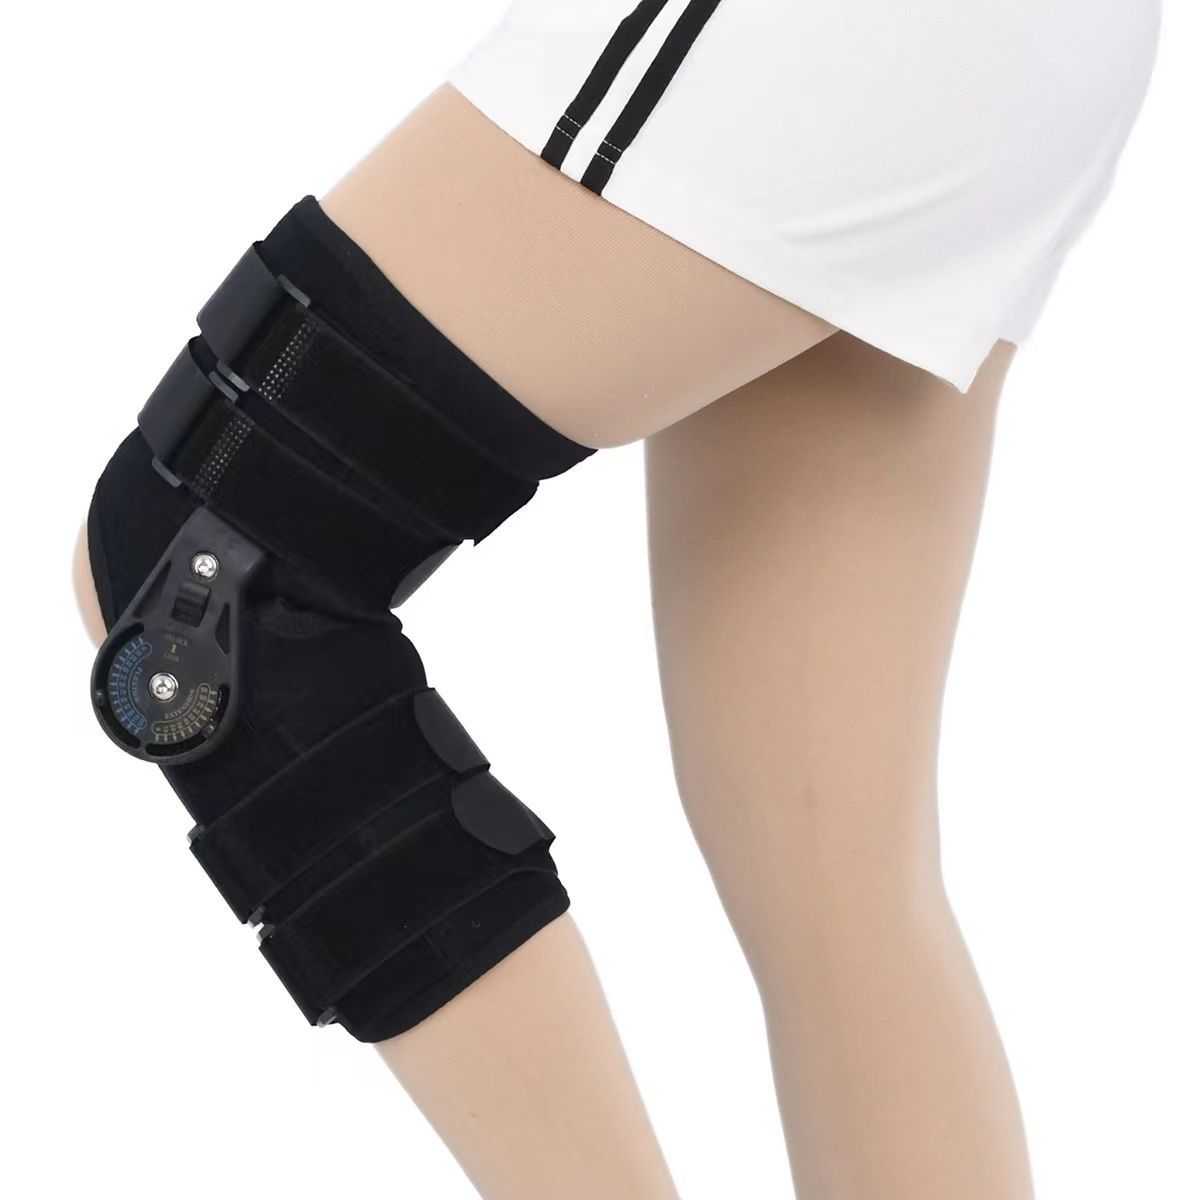 RKN 367 ортез на колено. Детские тазобедренные ортезы. Отрез после операции на колено. Отзывы после операции на суставе